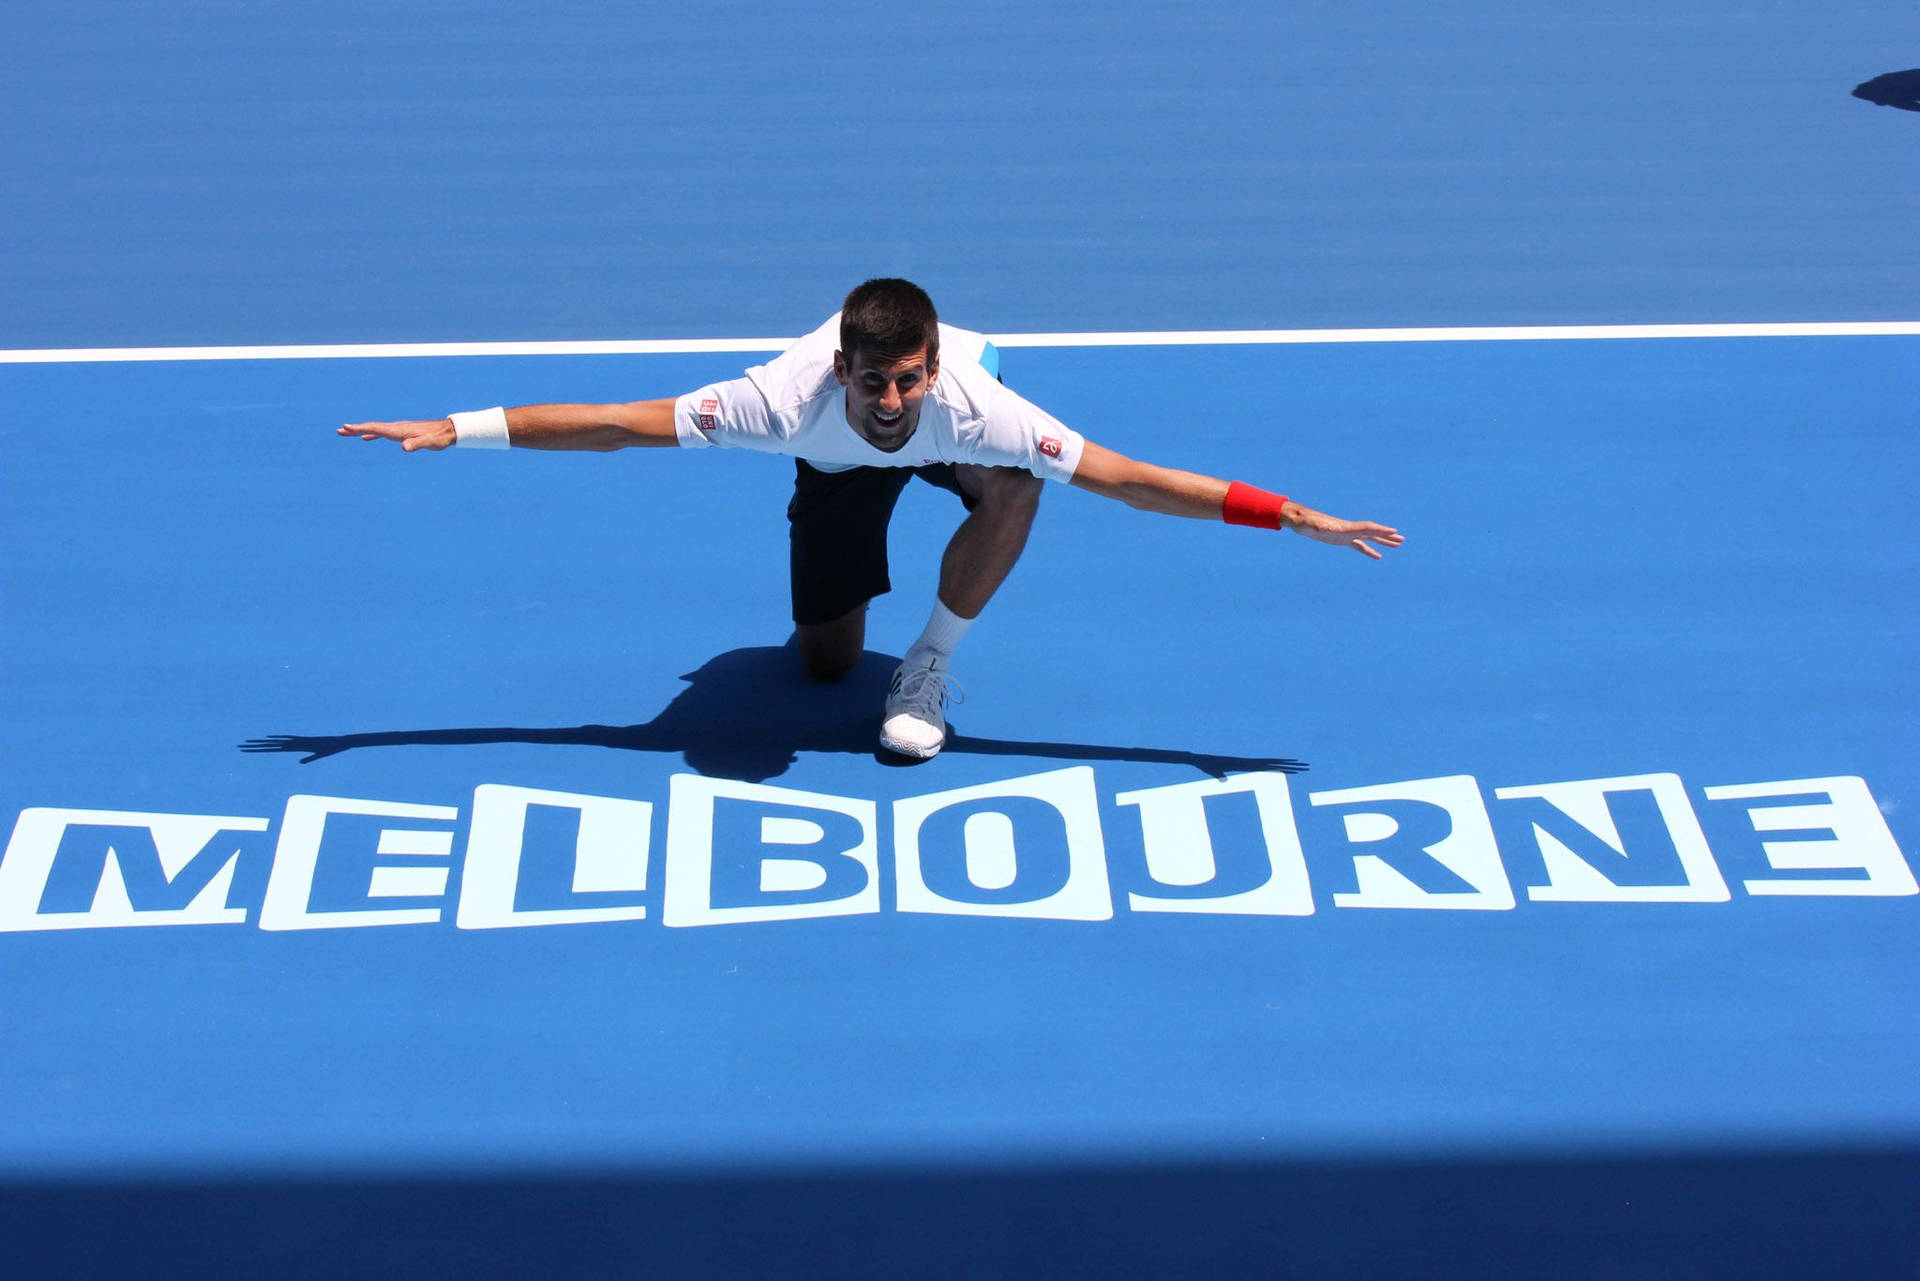 Australian Open Playful Photograph Of Novak Background